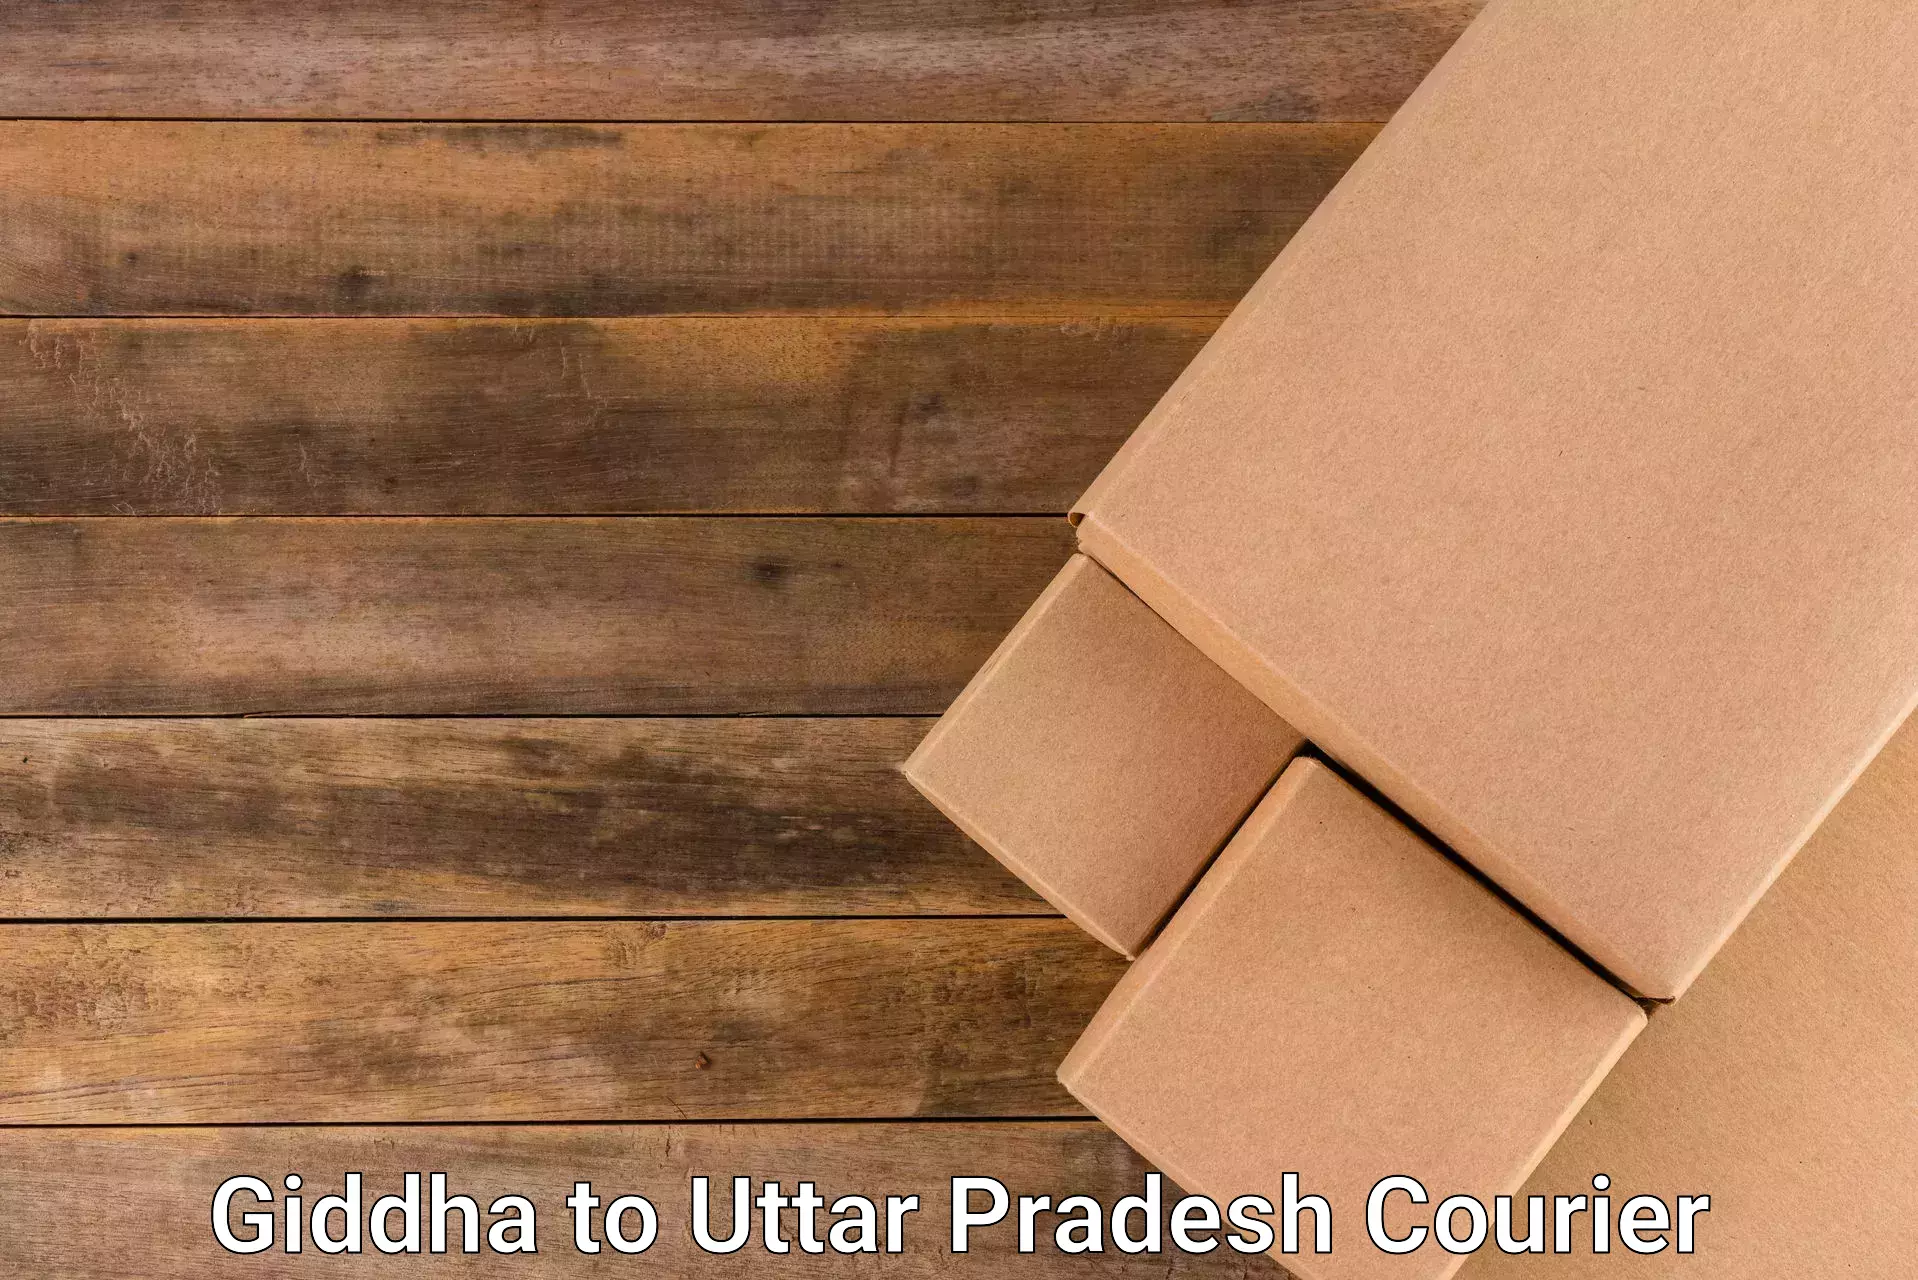 Courier service booking in Giddha to Prayagraj